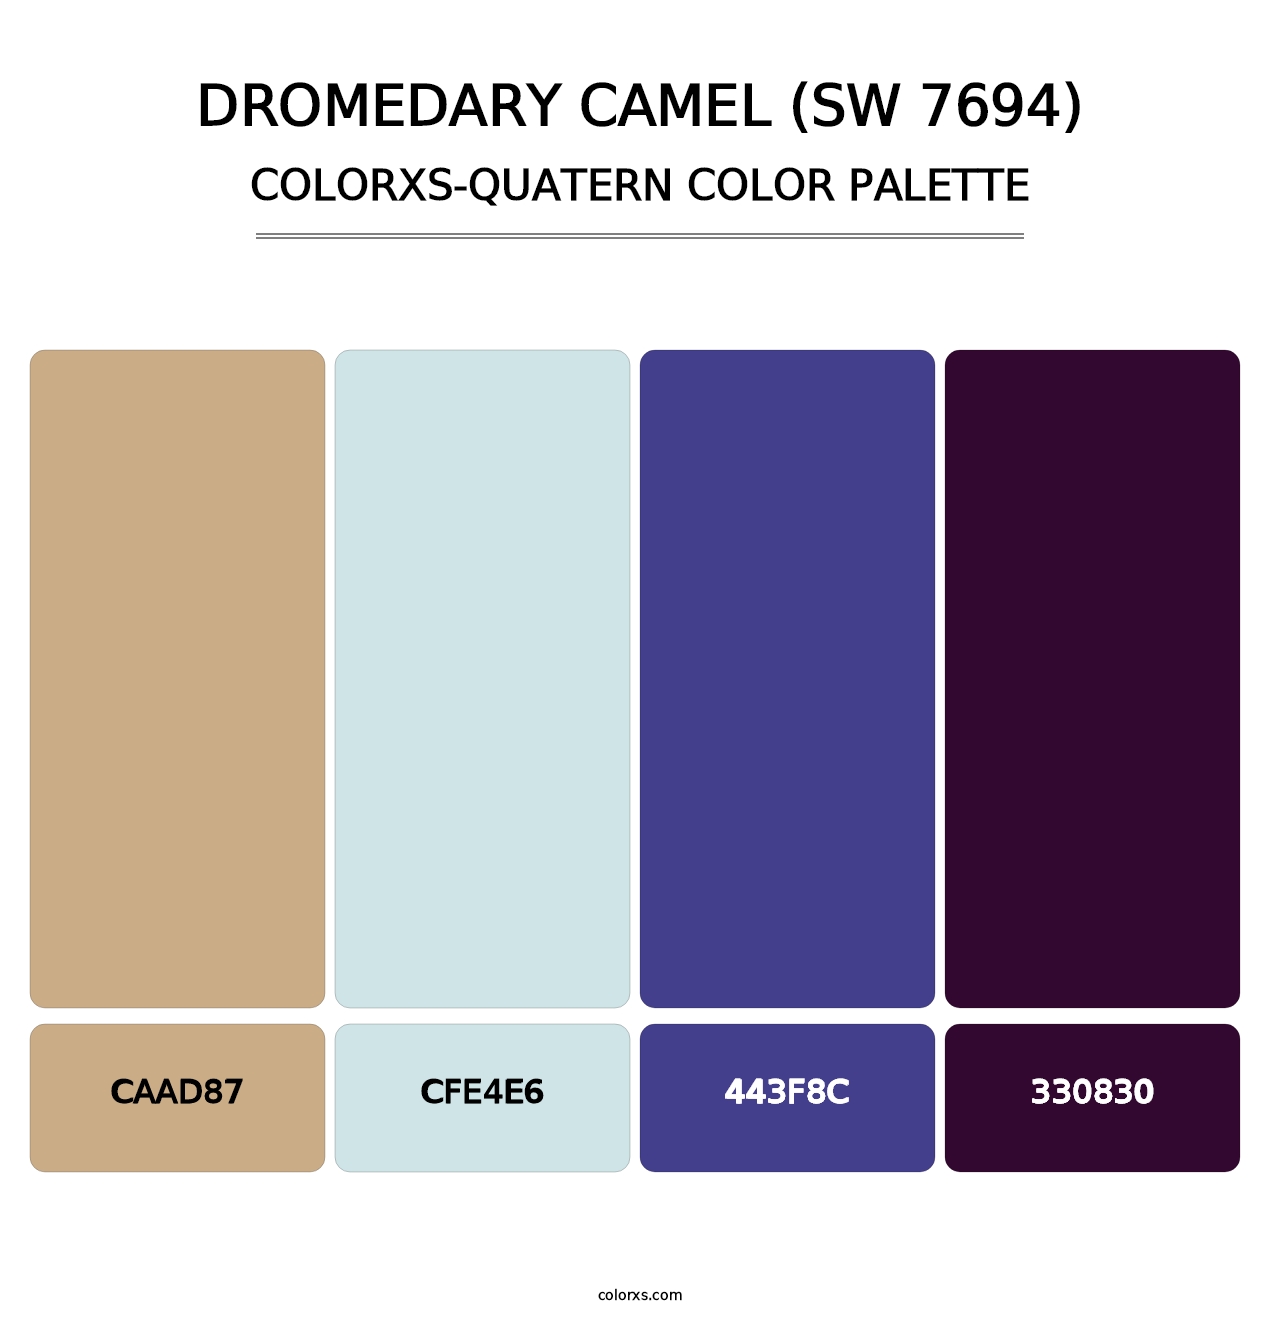 Dromedary Camel (SW 7694) - Colorxs Quatern Palette